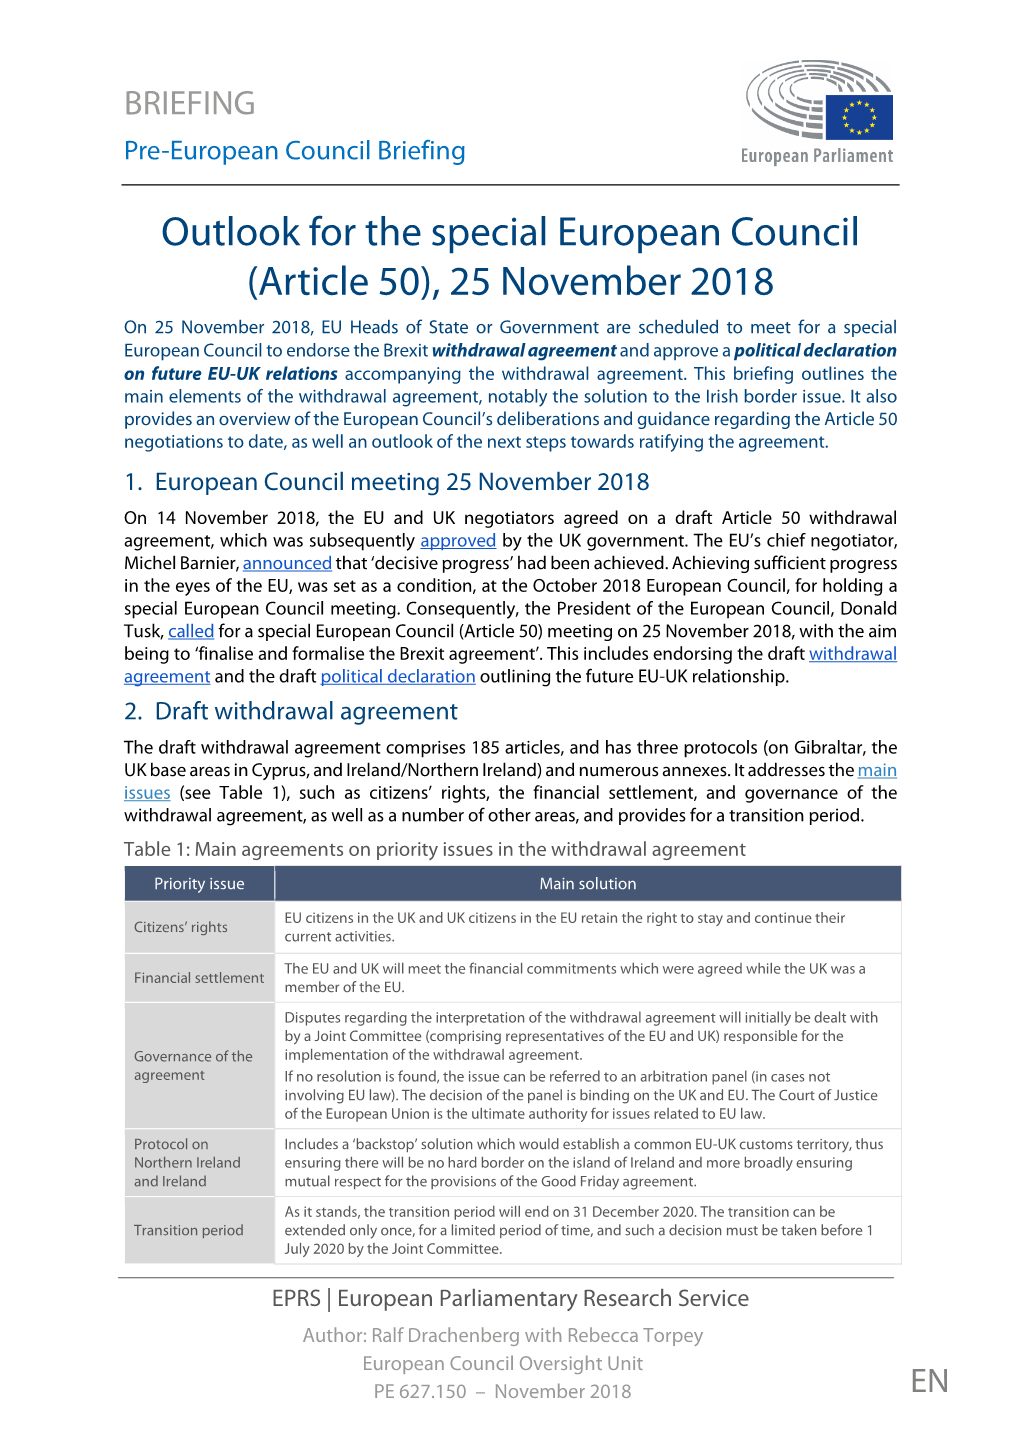 Outlook for the Special European Council (Article 50), 25 November